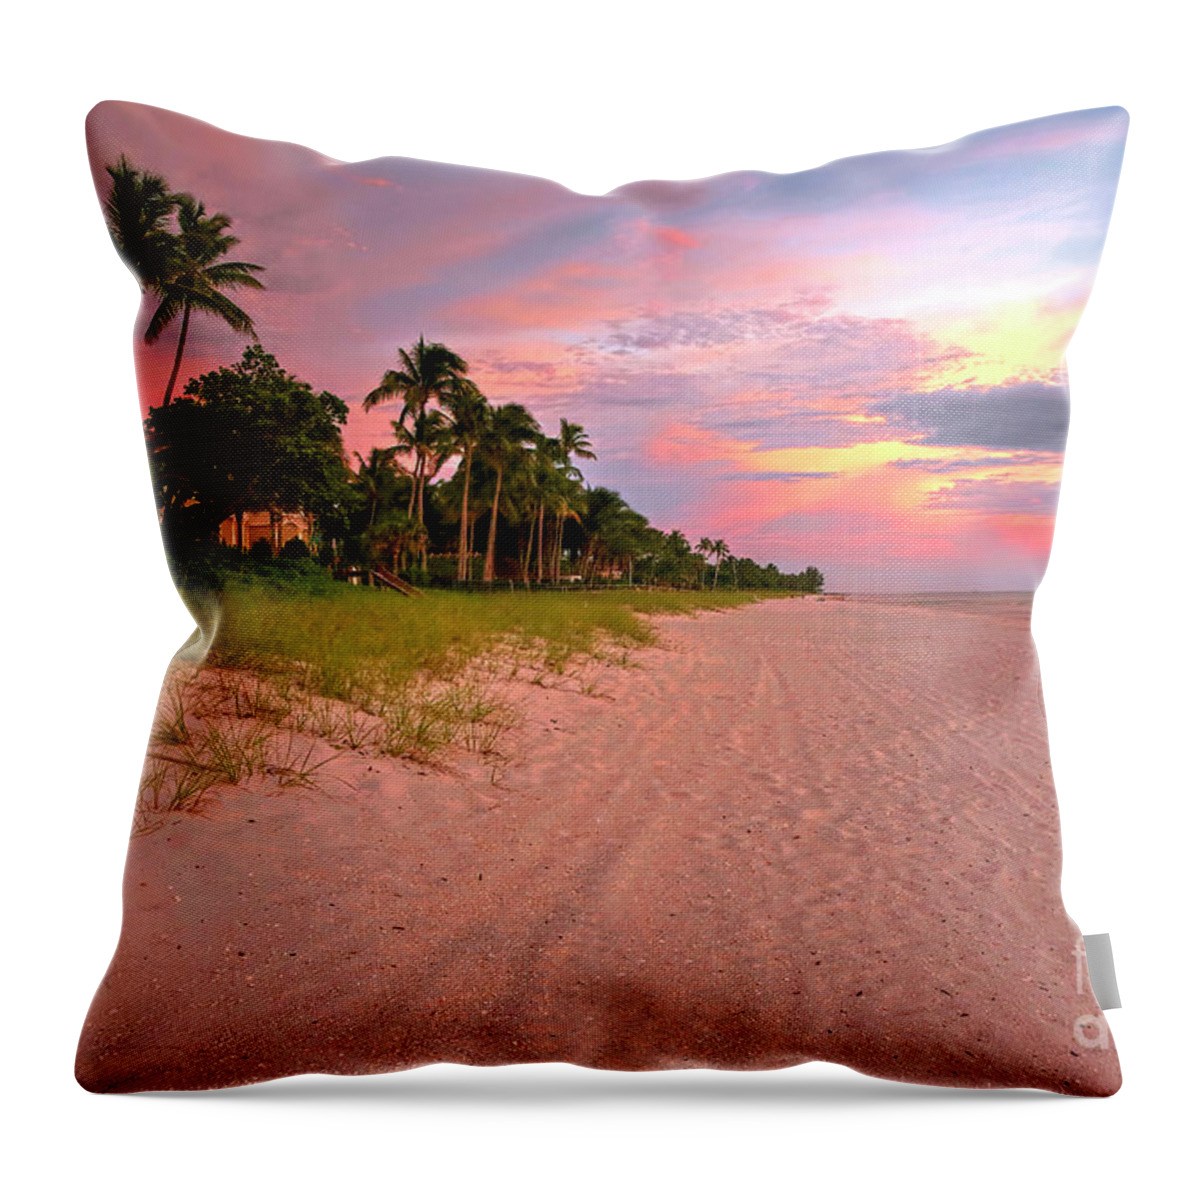 Photographs Throw Pillow featuring the photograph Naples Beach At Sunset, Florida by Felix Lai